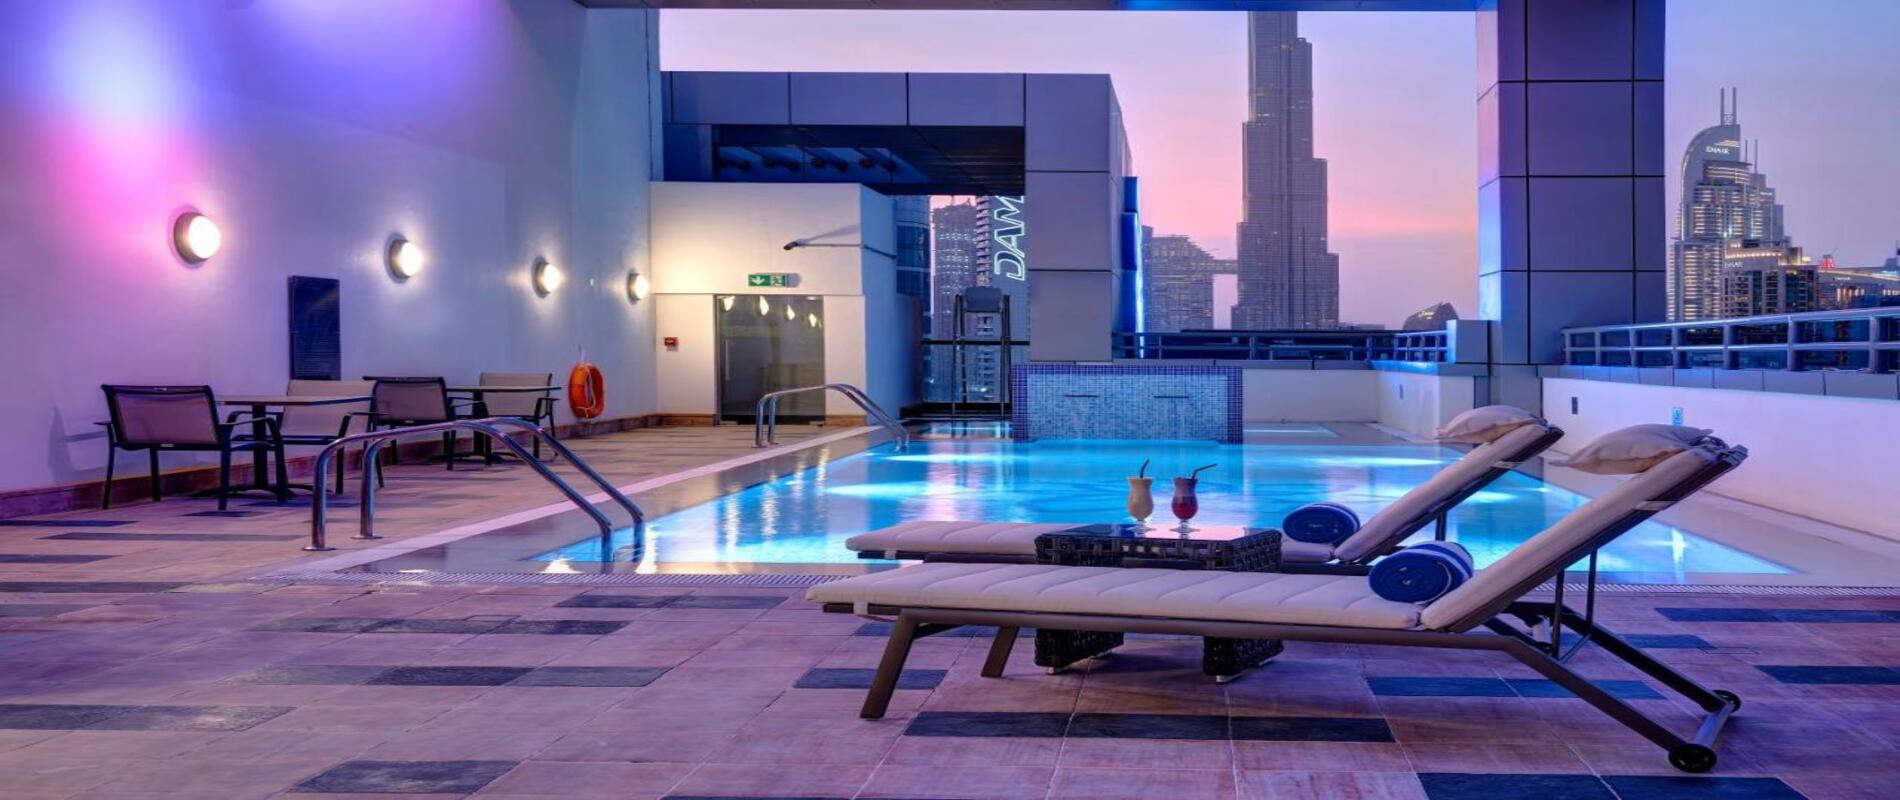 Royal Continental Suites - Business Bay Dubai.